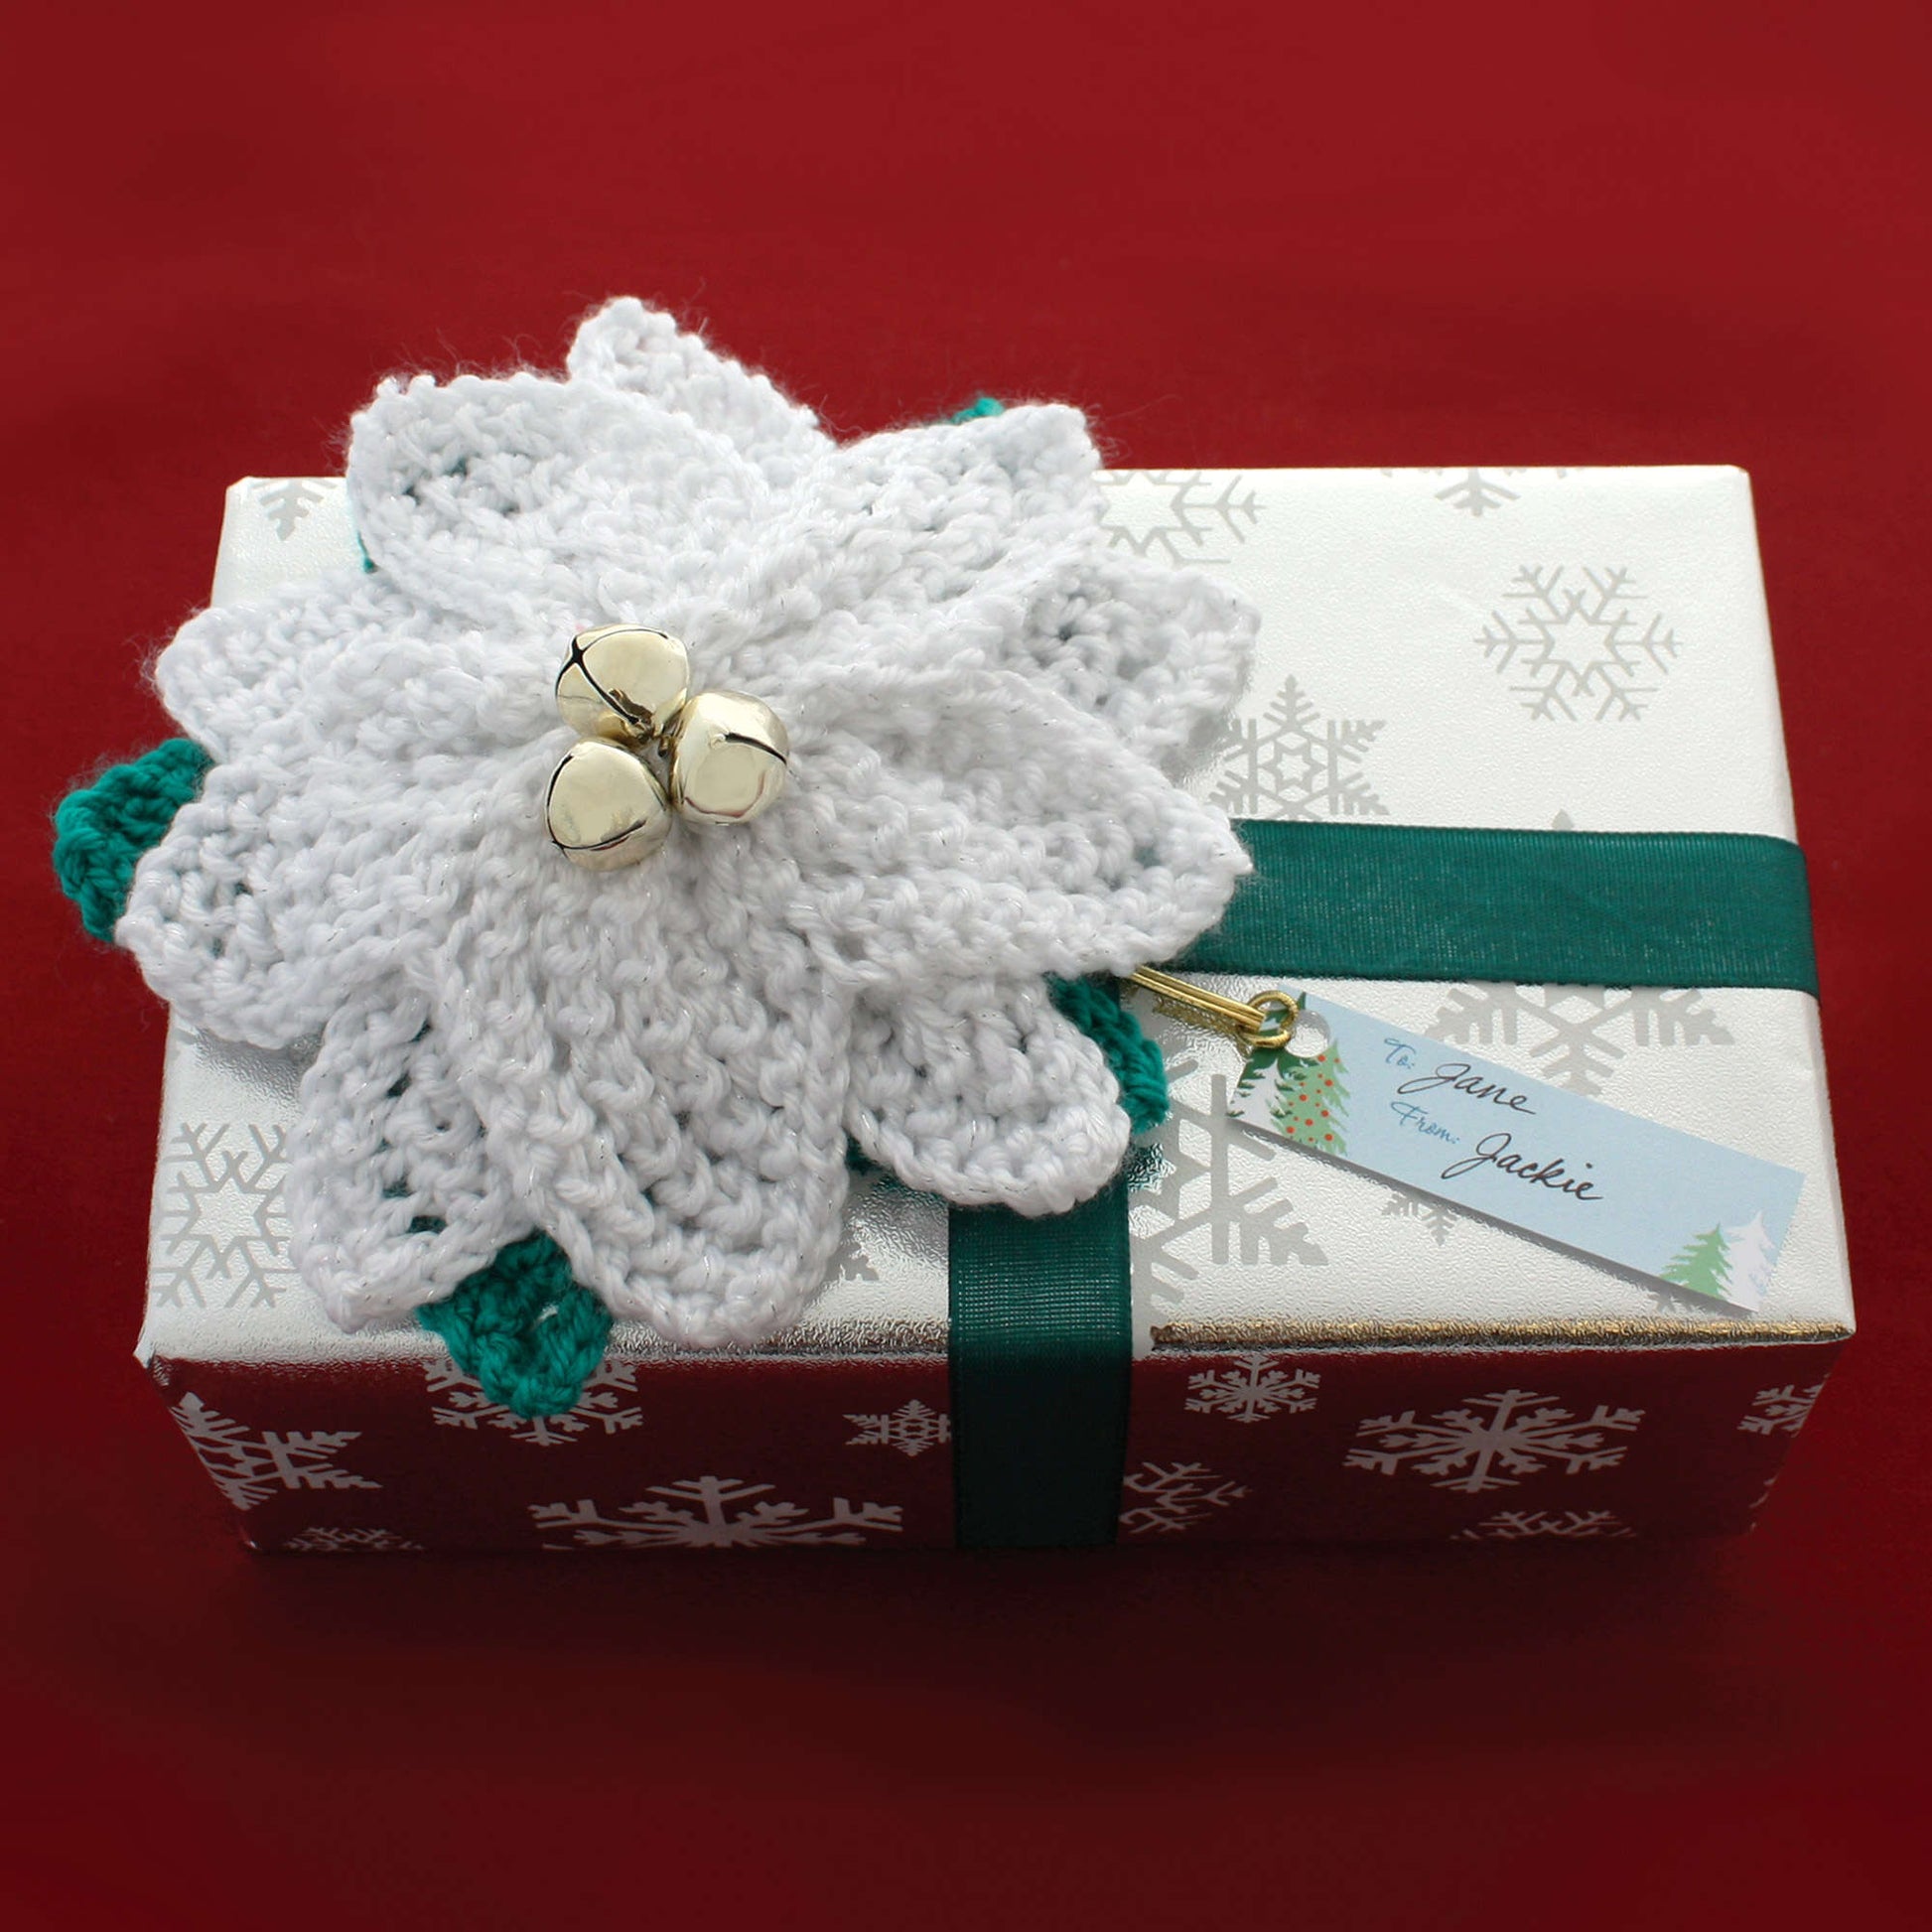 Bernat Poinsettia Gift Topper Knit Holiday made in Bernat Satin yarn